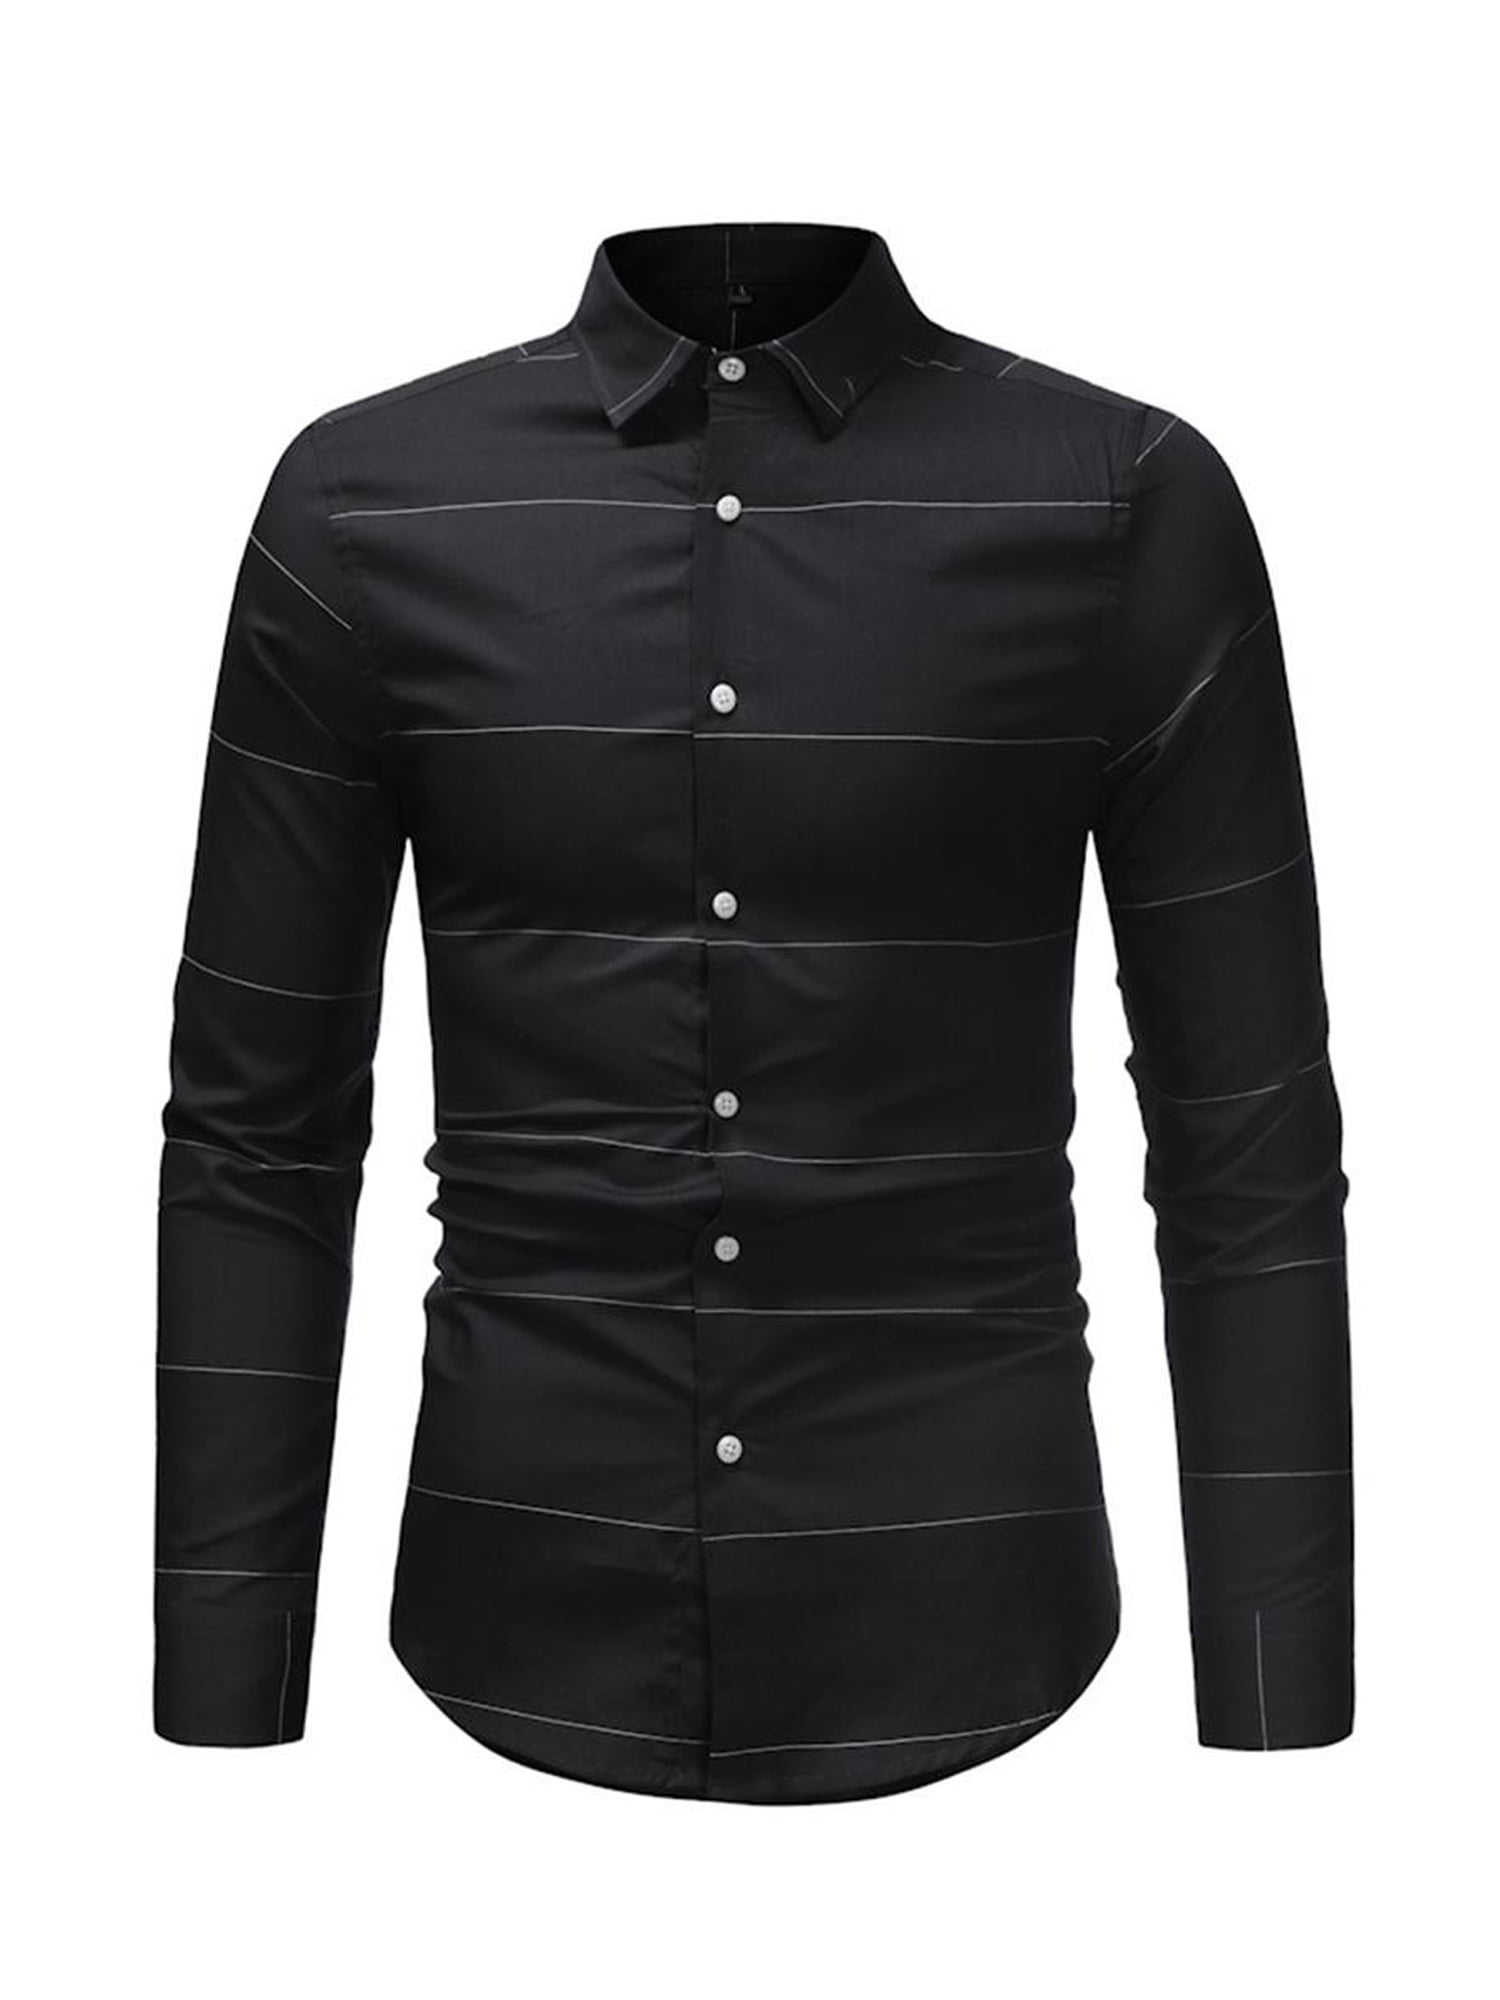 Mens Formal Casual Smart Long Sleeve Shirts Black Navy Blue M L XL XXL New 2018 